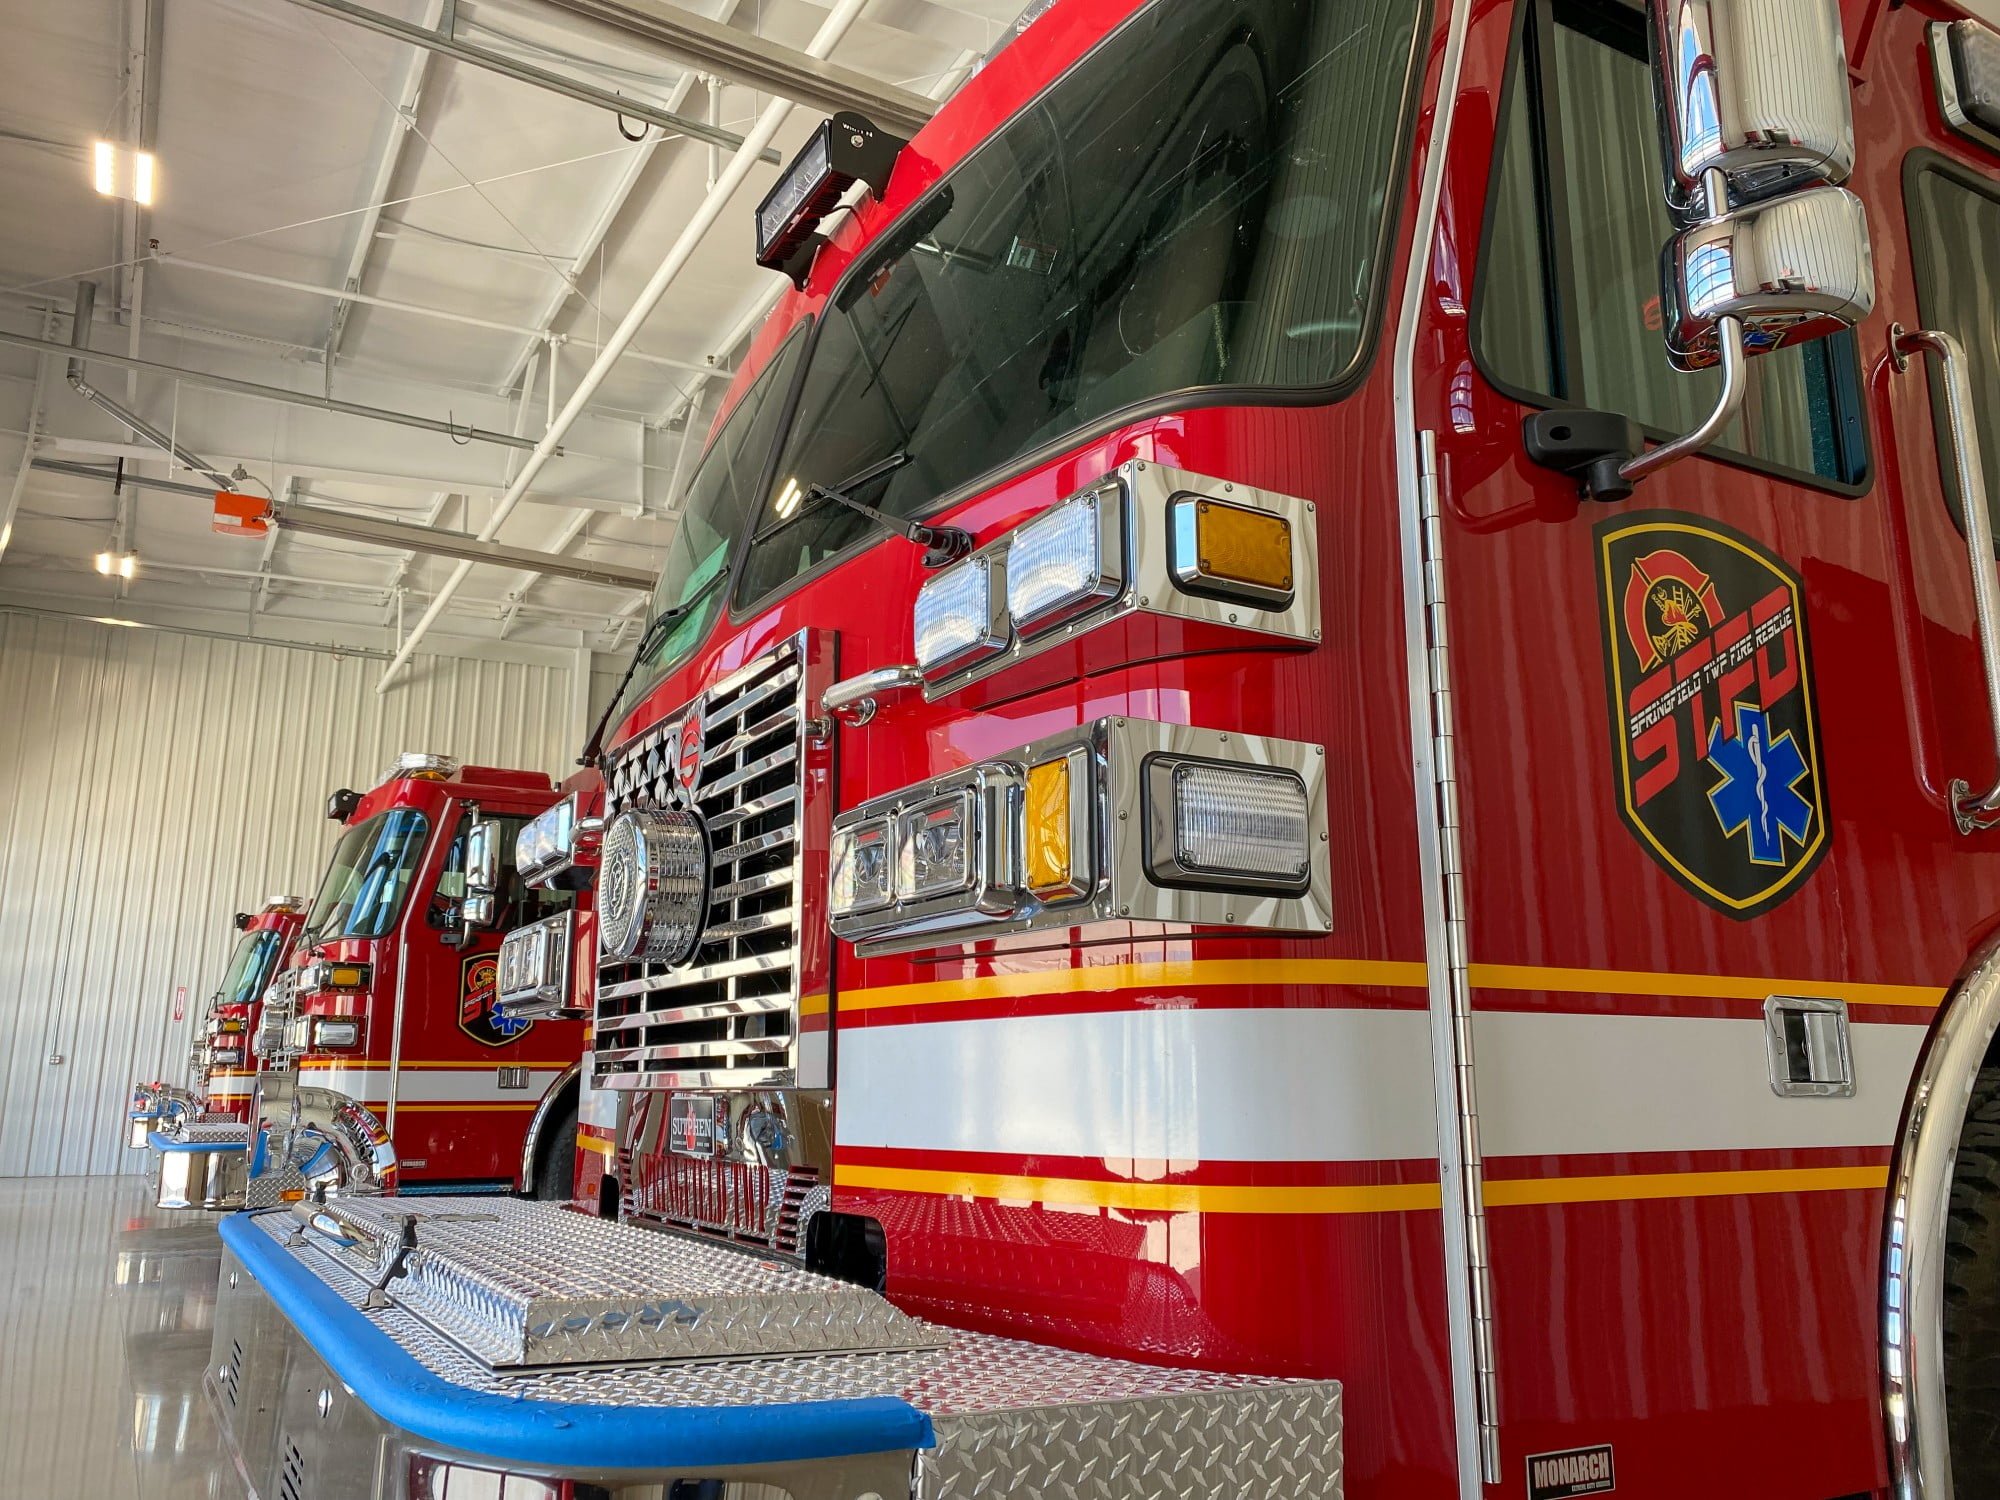 Springfield Township Fire Department